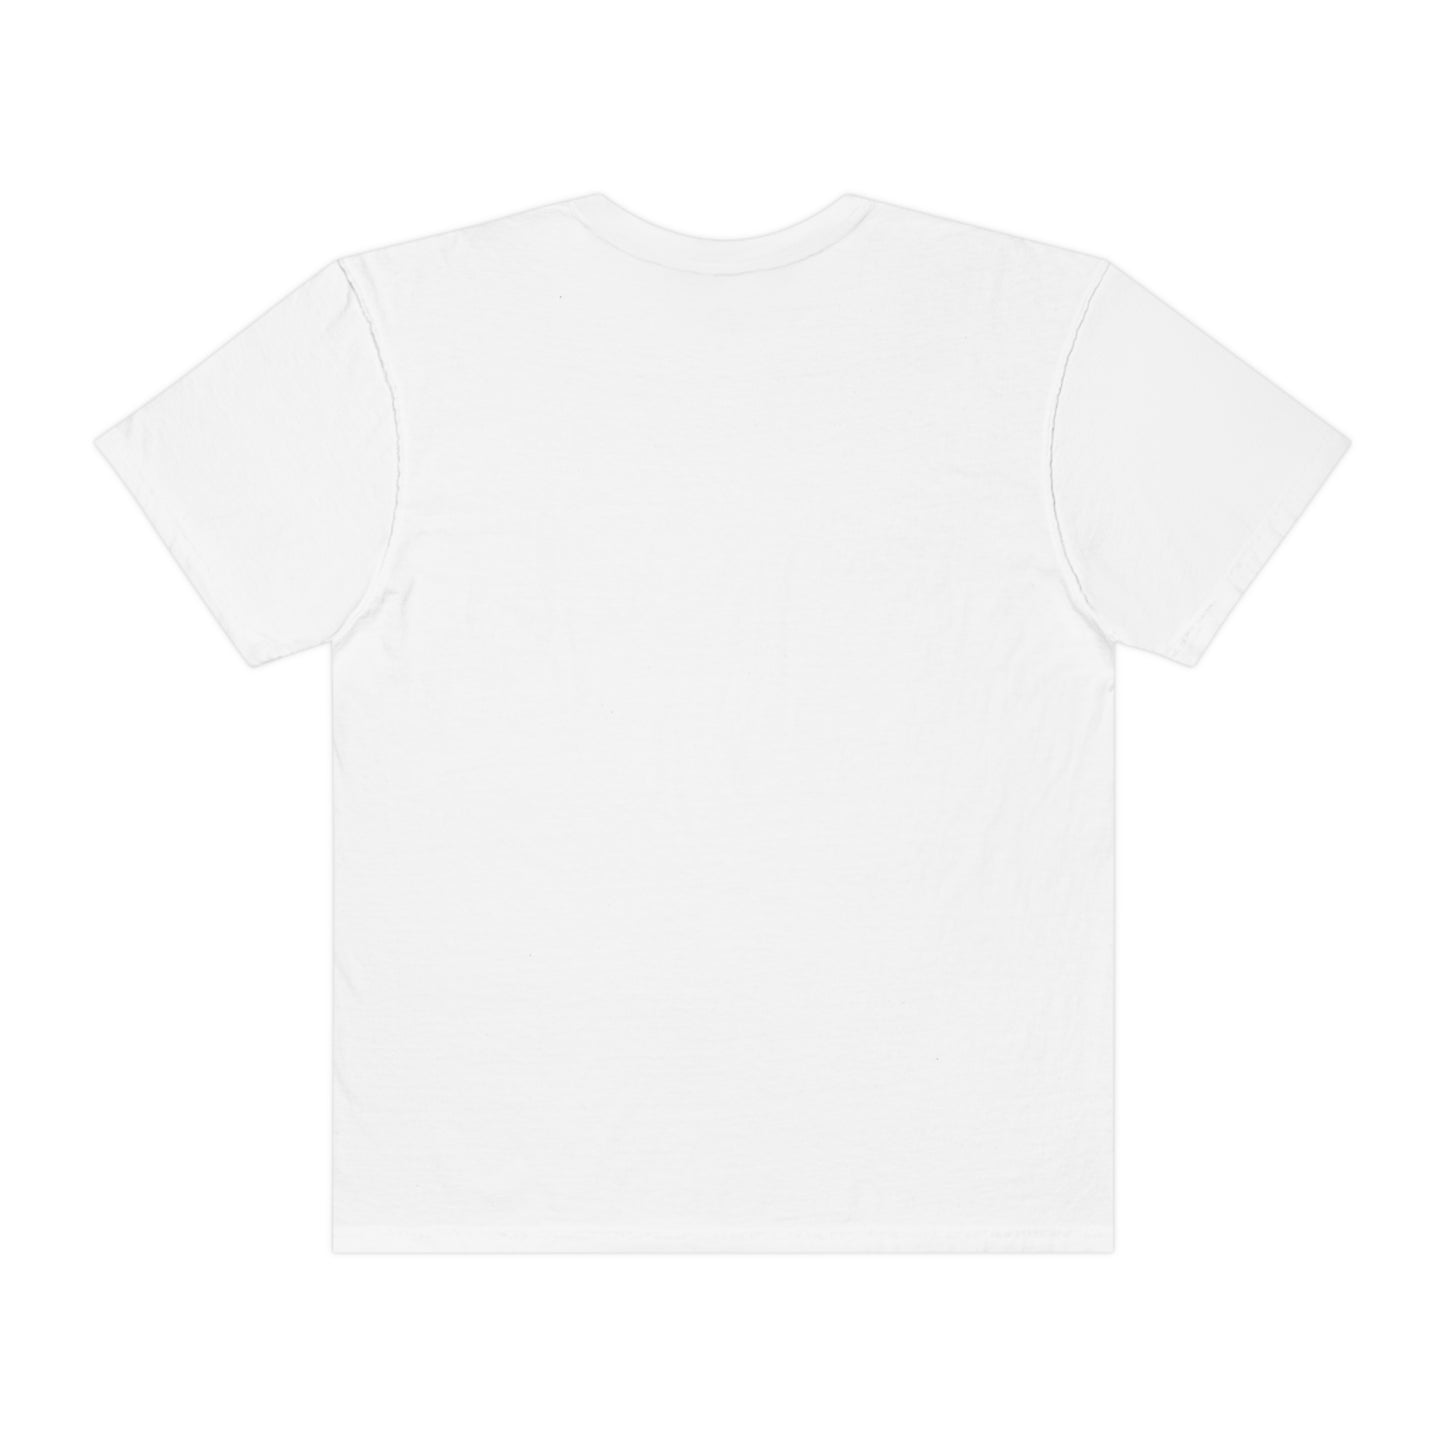 Classic "Sex Rules" Basic T-shirt (Unisex)